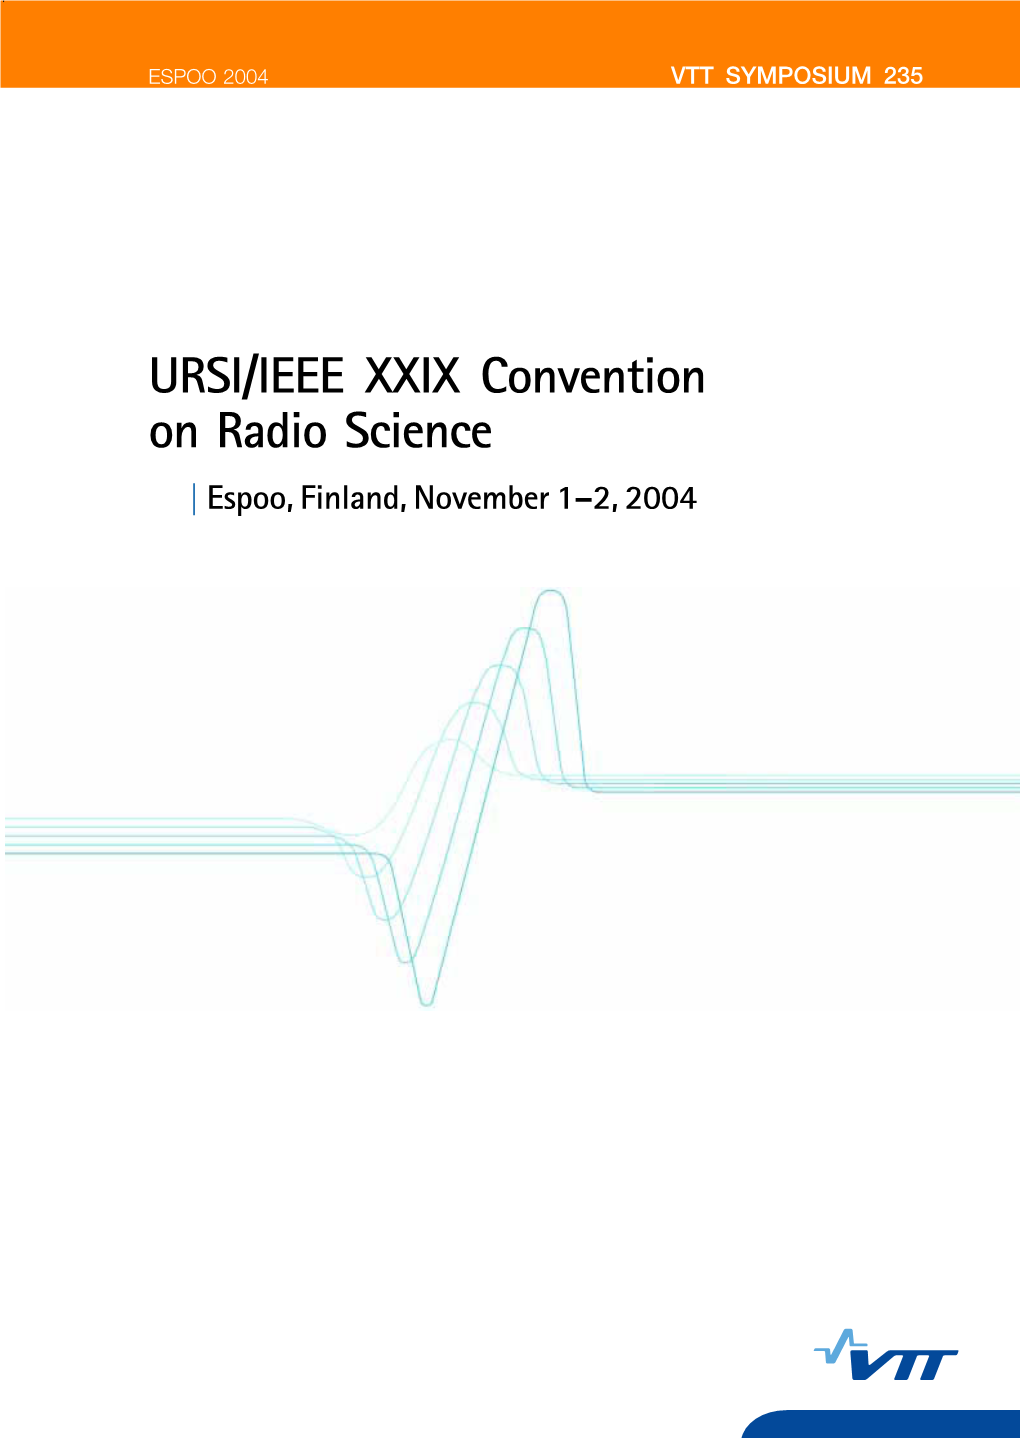 URSI/IEEE XXIX Convention on Radio Science